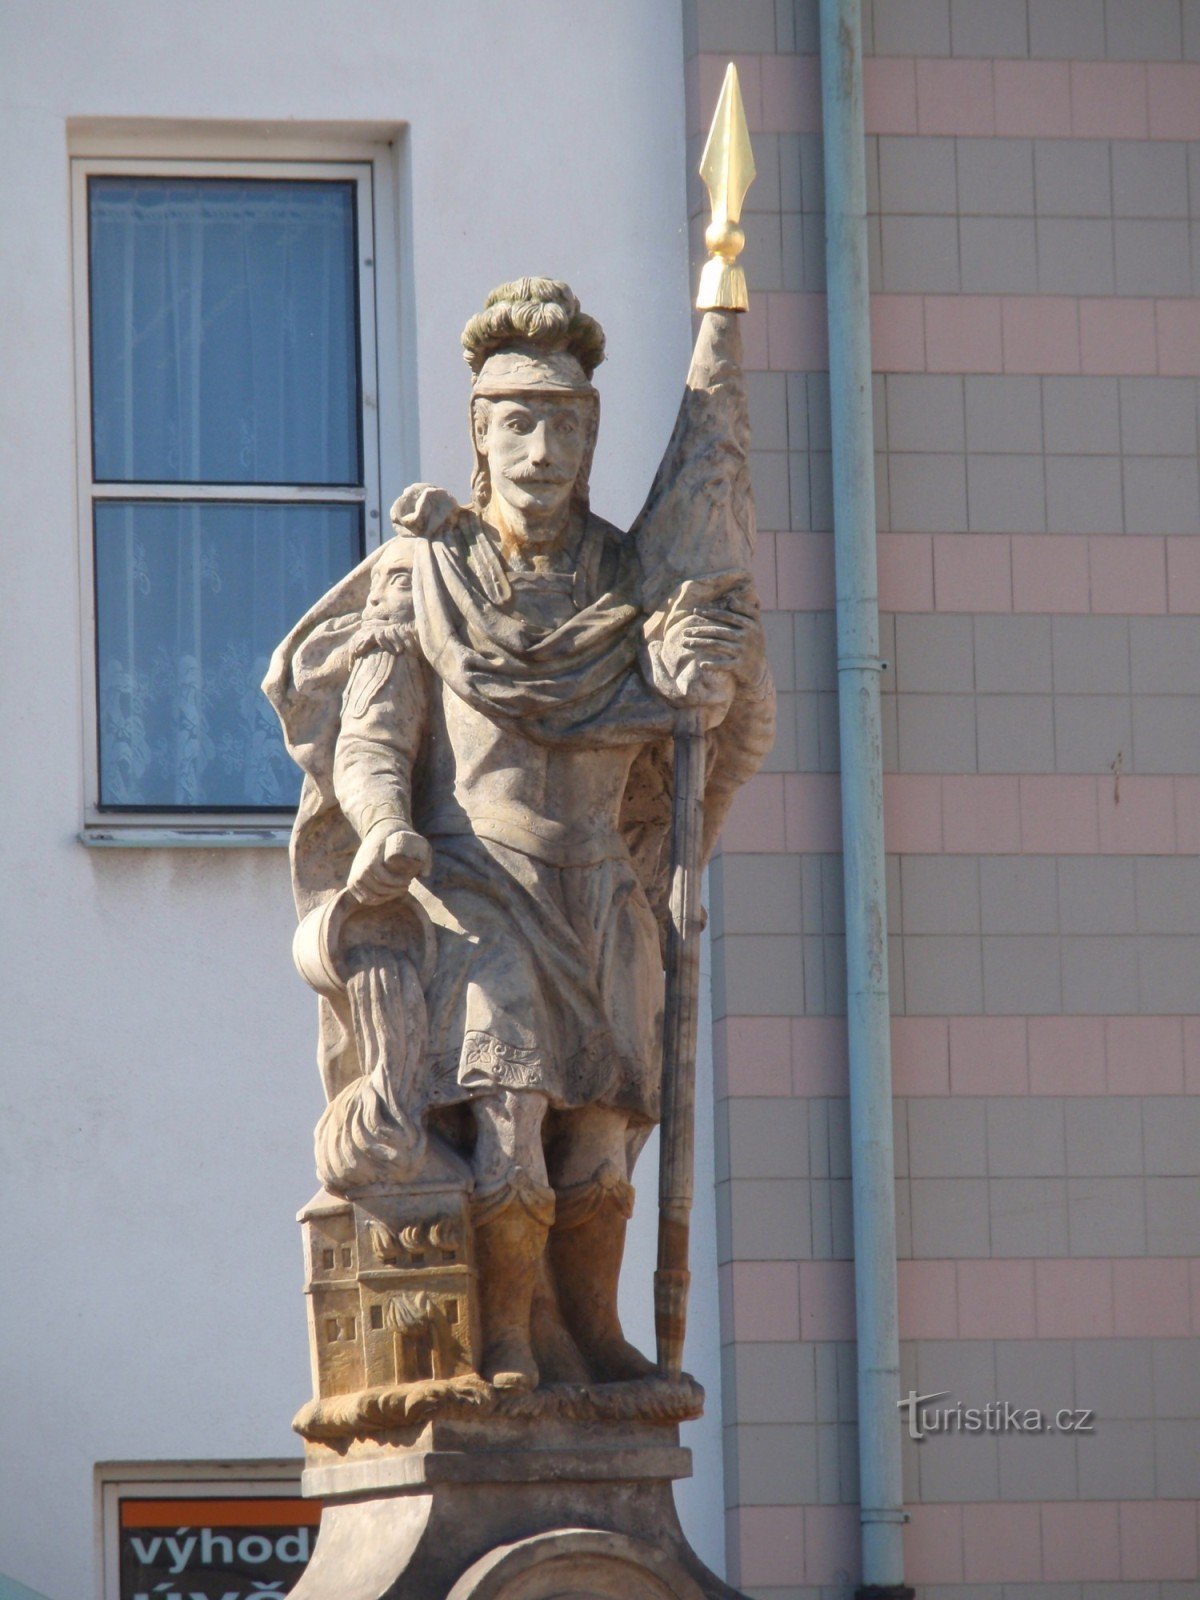 Ústí nad Orlicí - 圣约翰雕像弗洛里亚纳